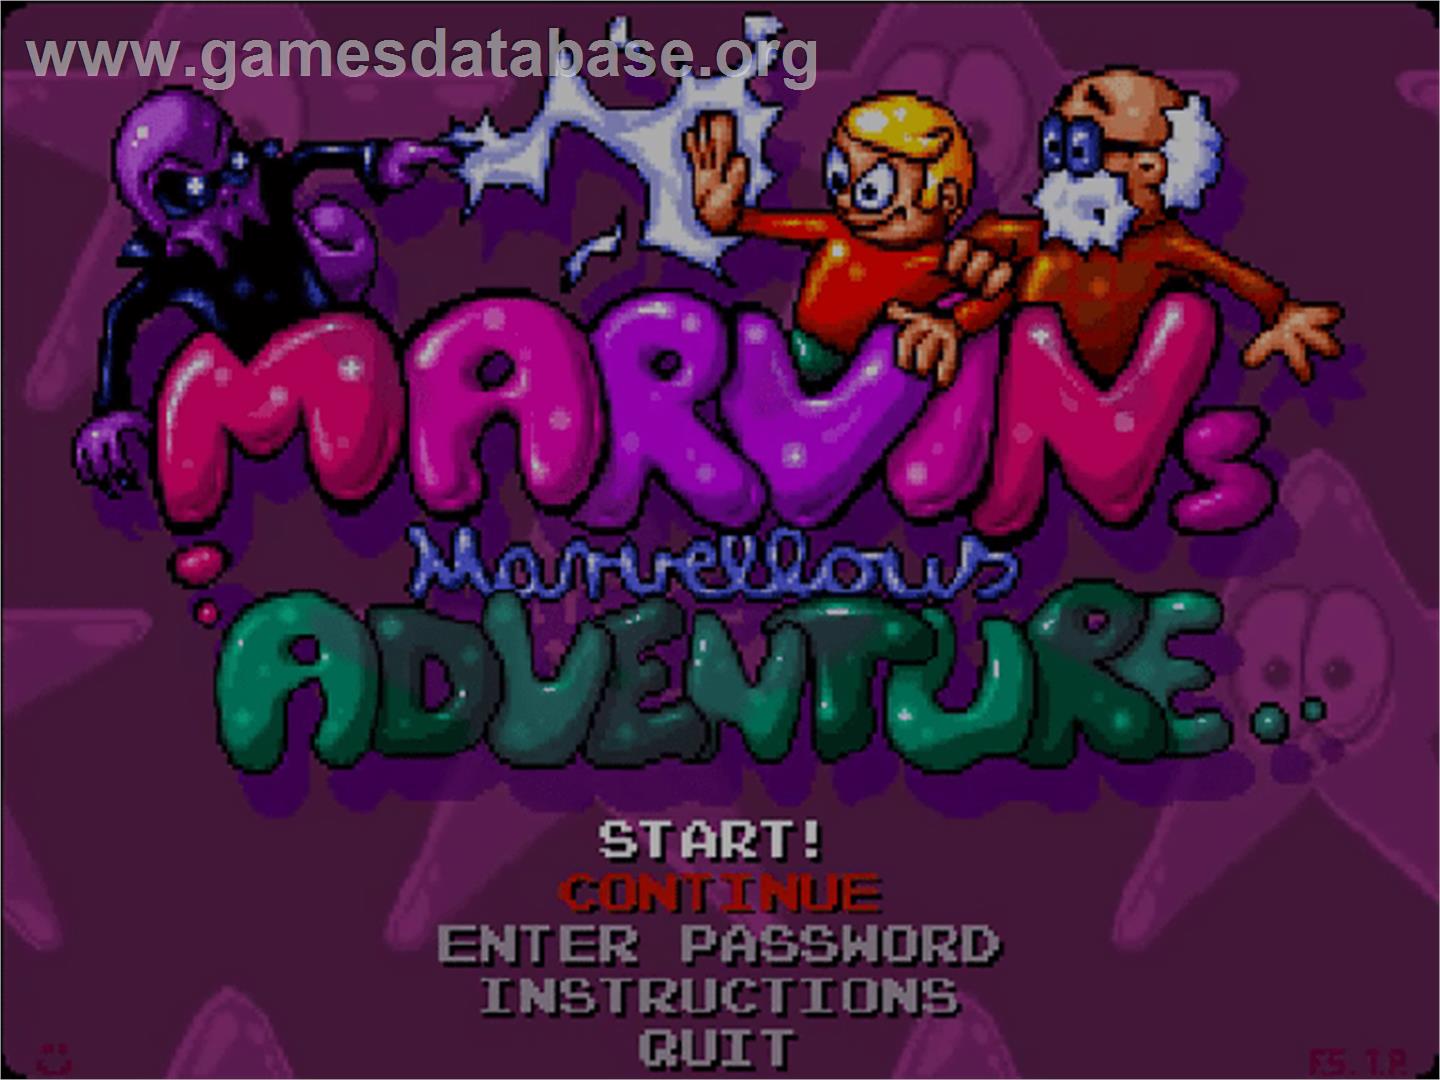 Marvin's Marvellous Adventure - Commodore Amiga CD32 - Artwork - Title Screen